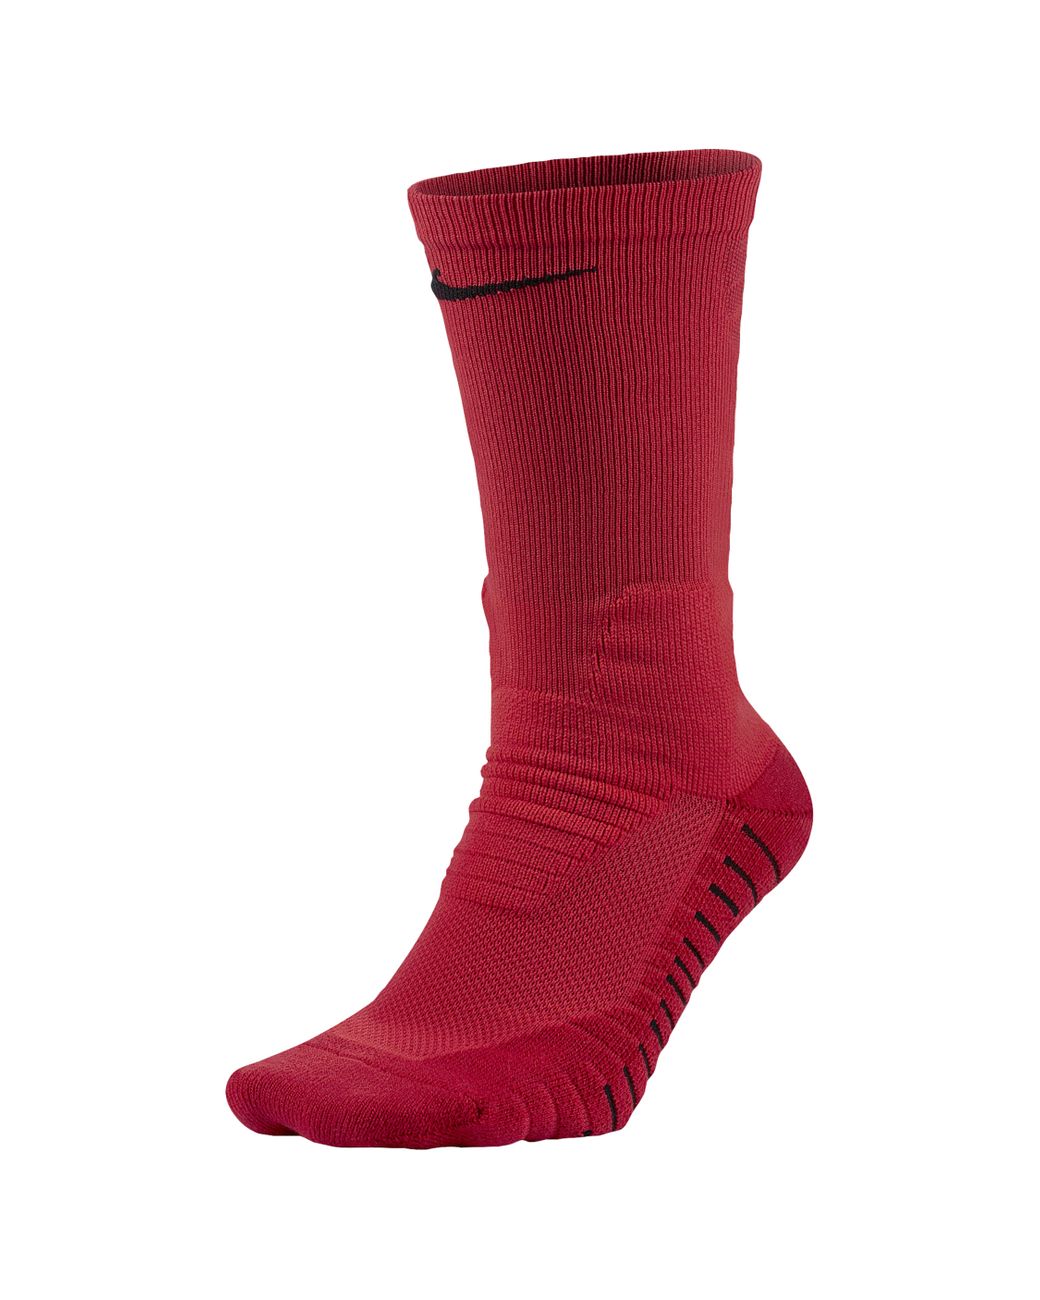 Nike Synthetic Vapor 3.0 Football Crew Socks in University Red/Black ...